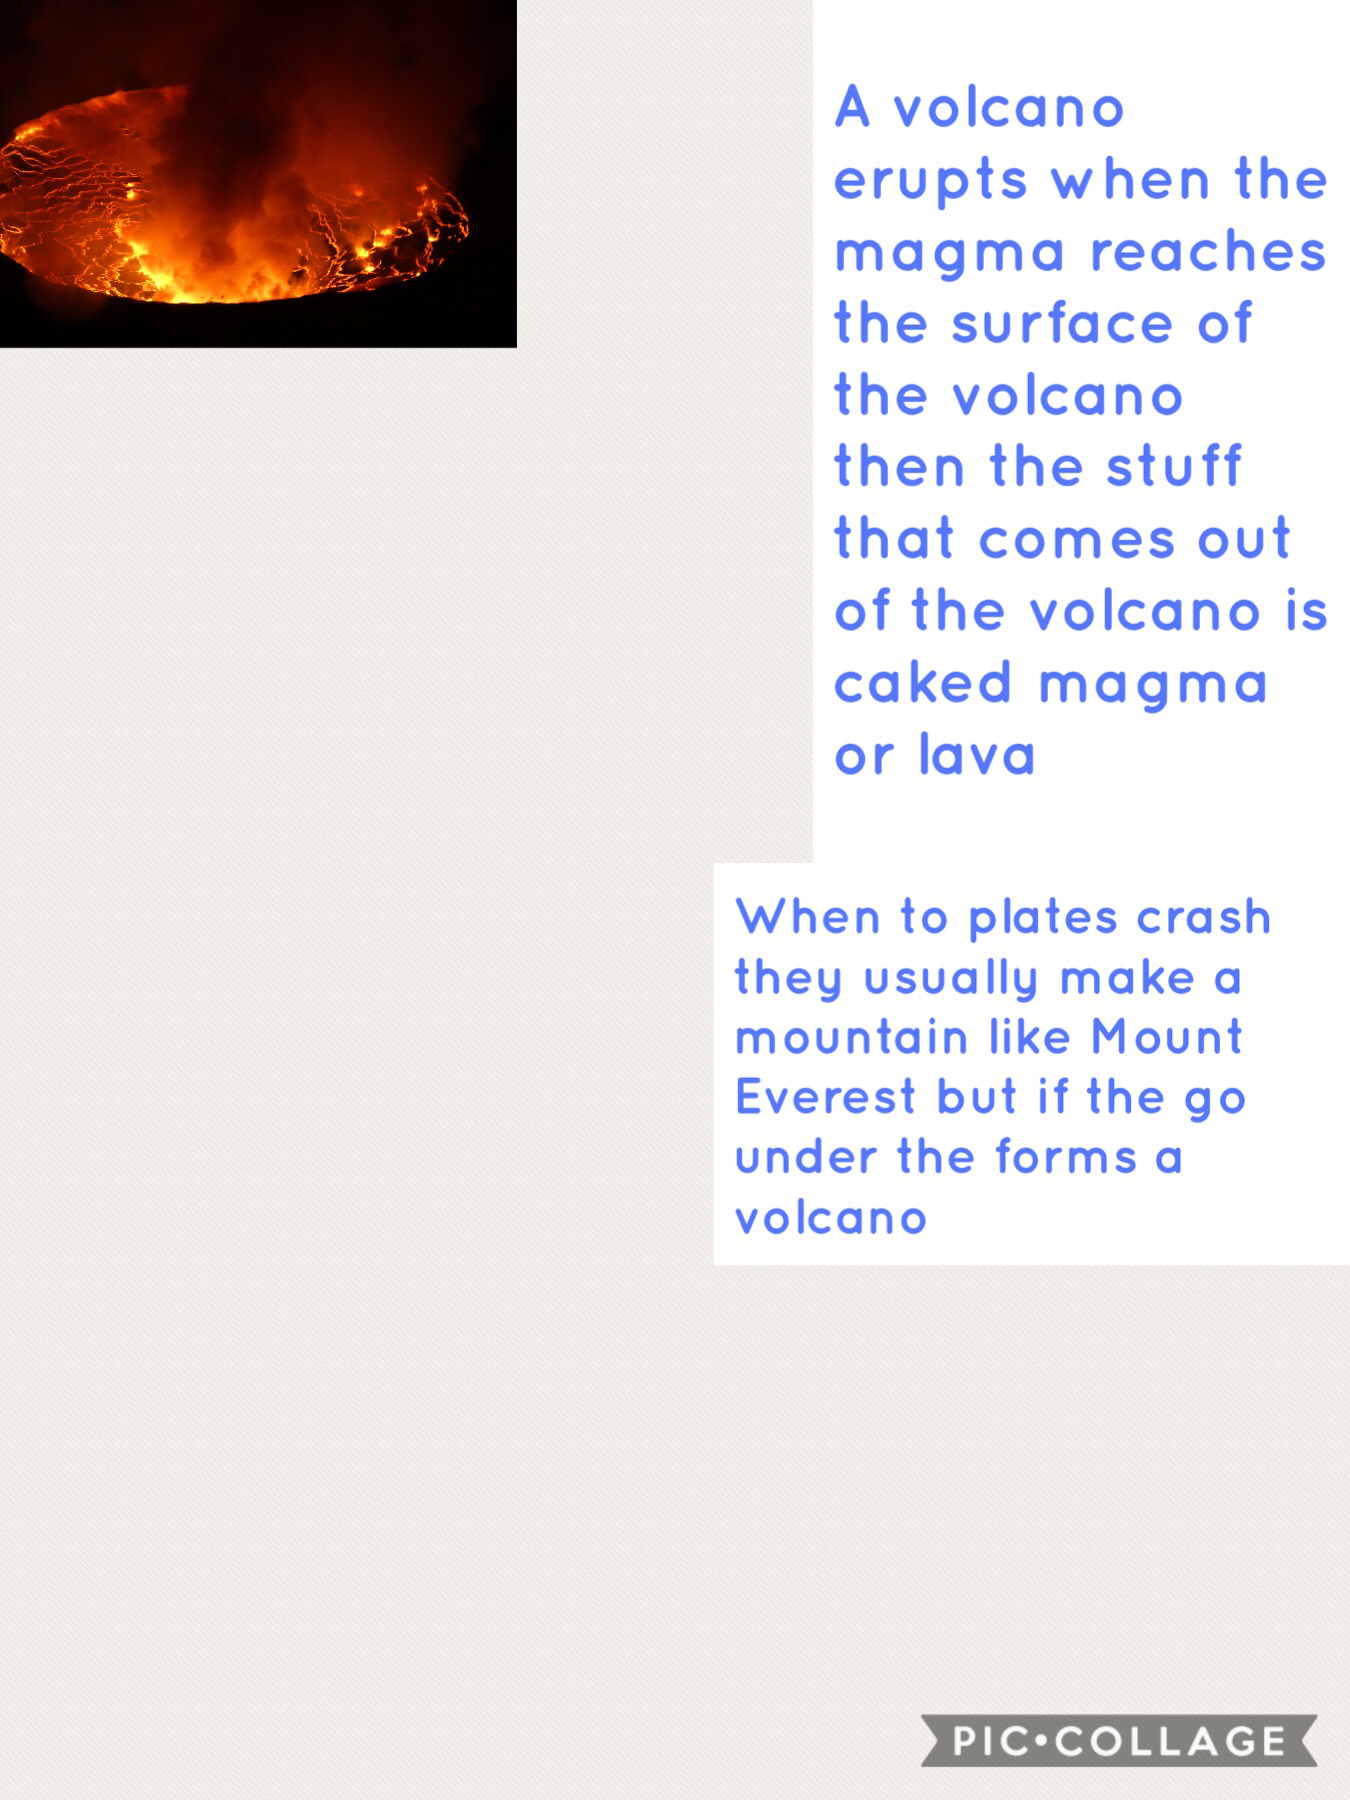 Leon volcano factboard